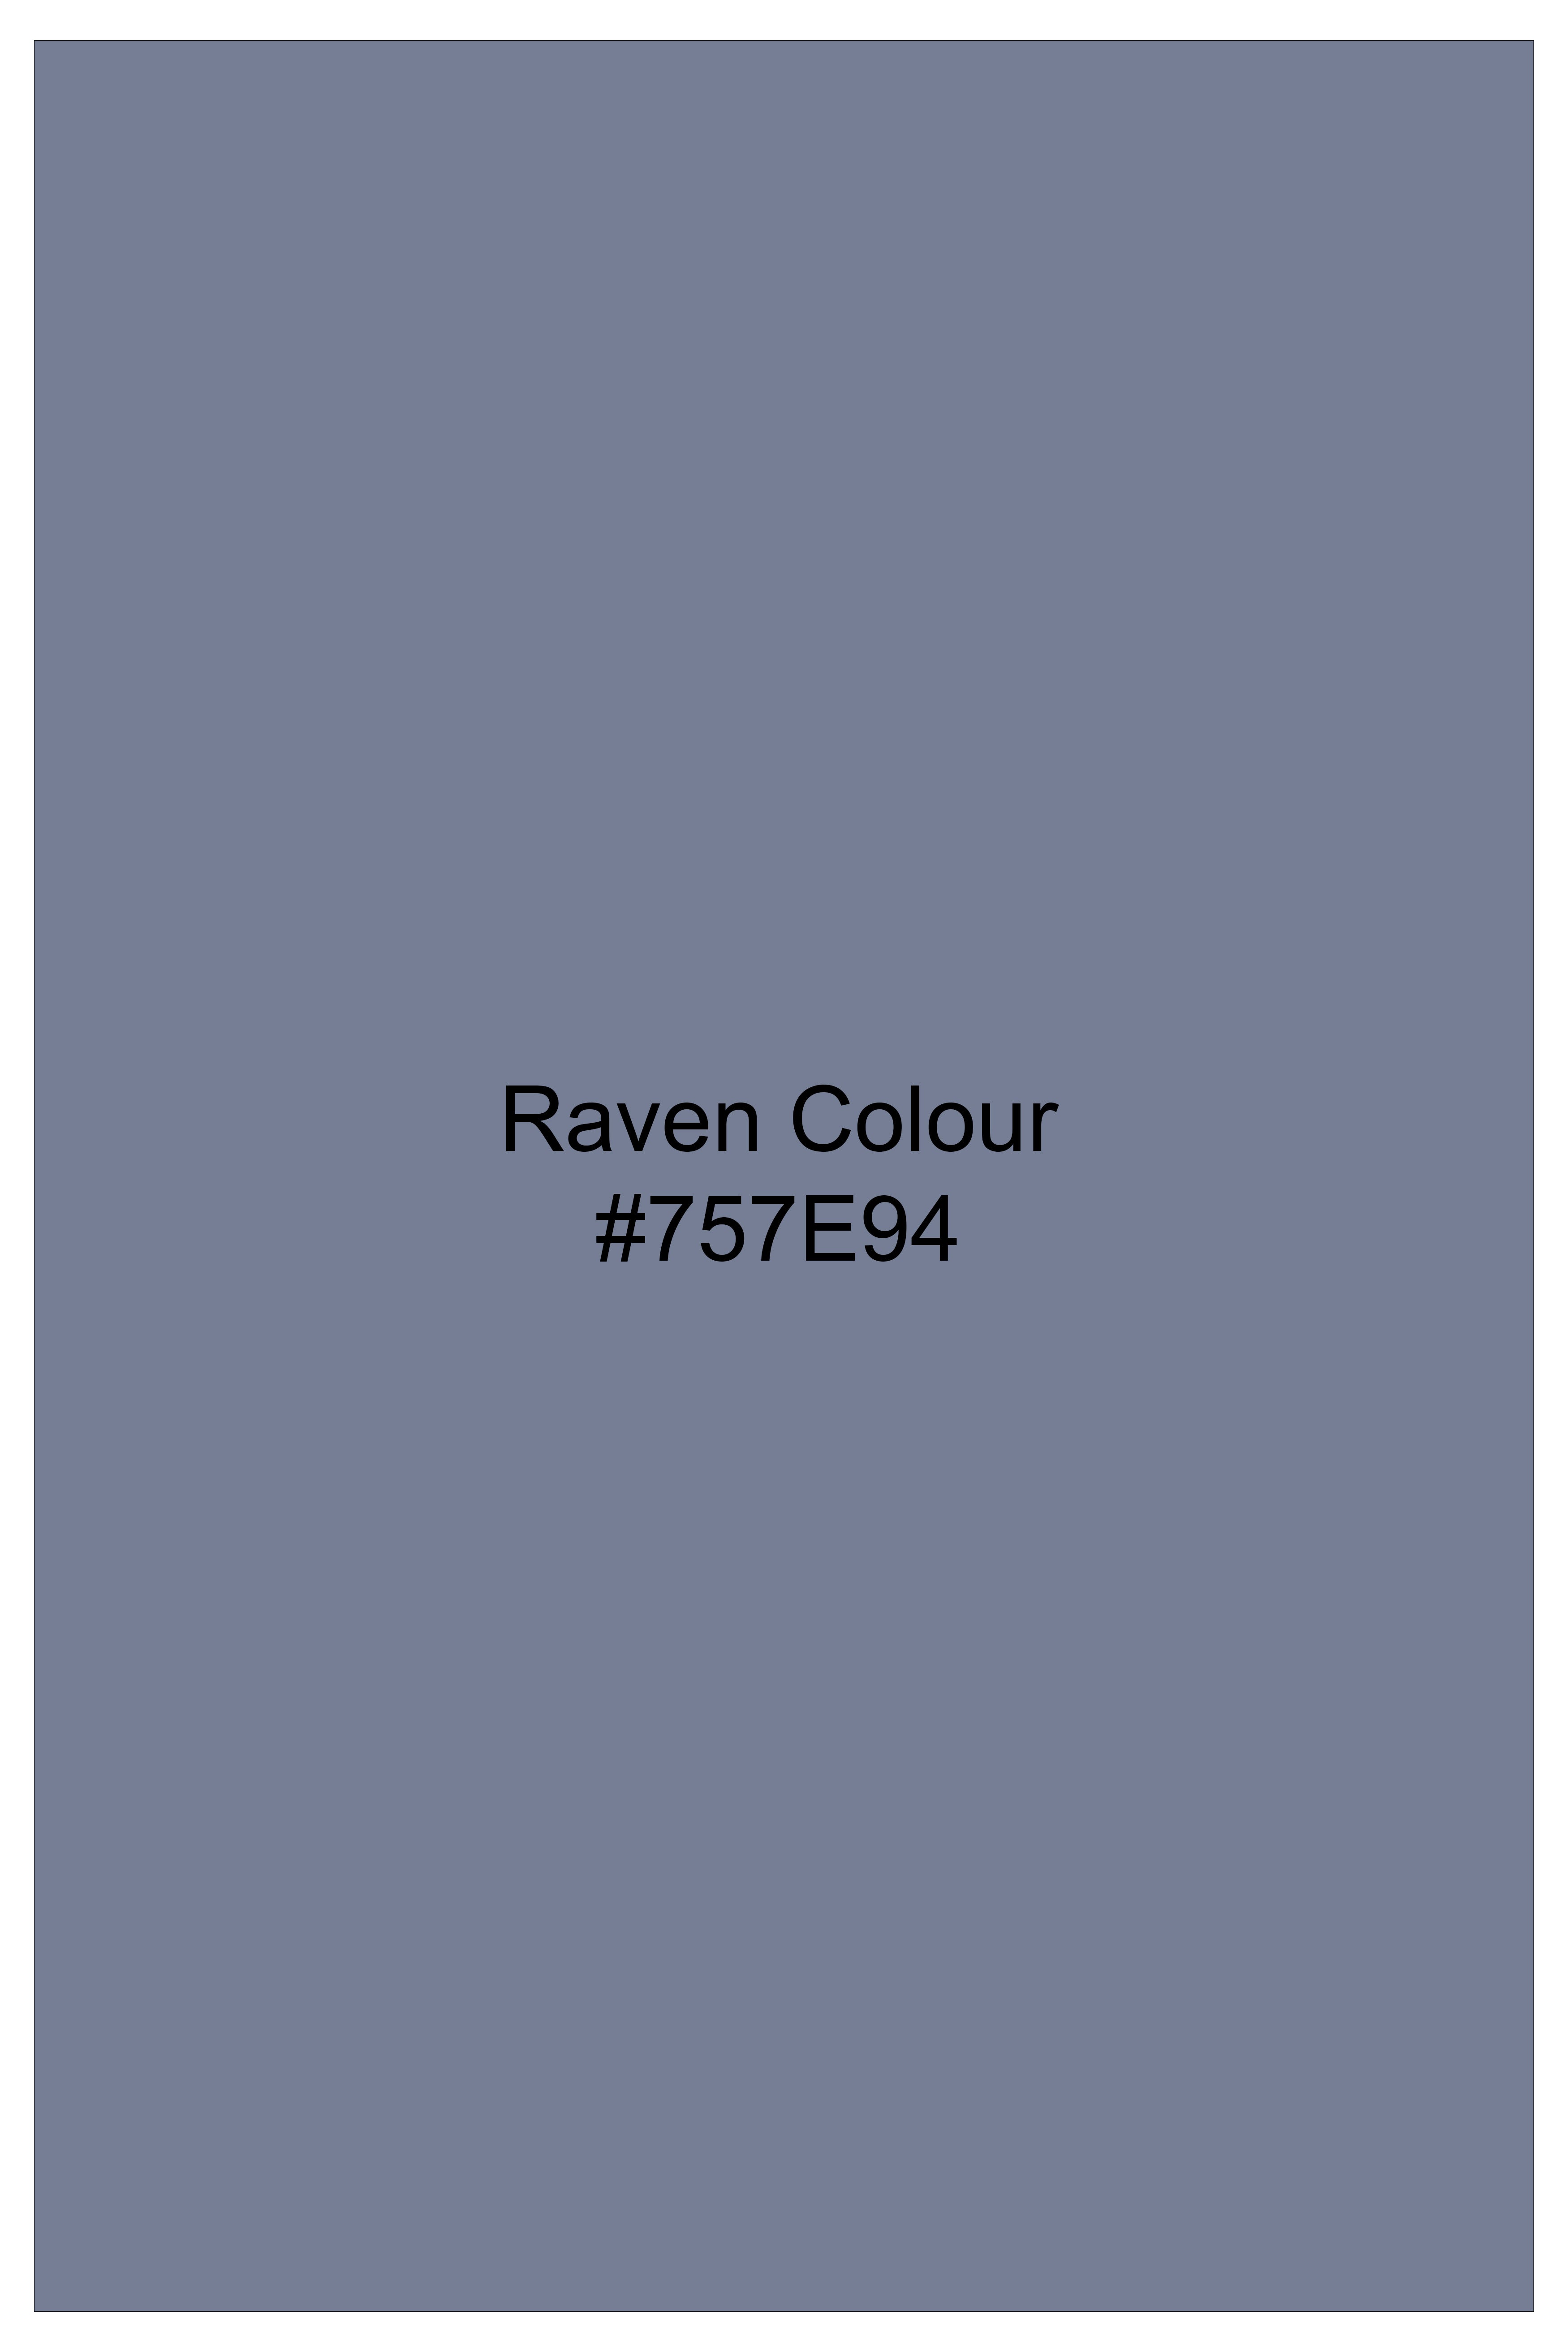 Raven Blue Dobby Textured Premium Cotton Shirt